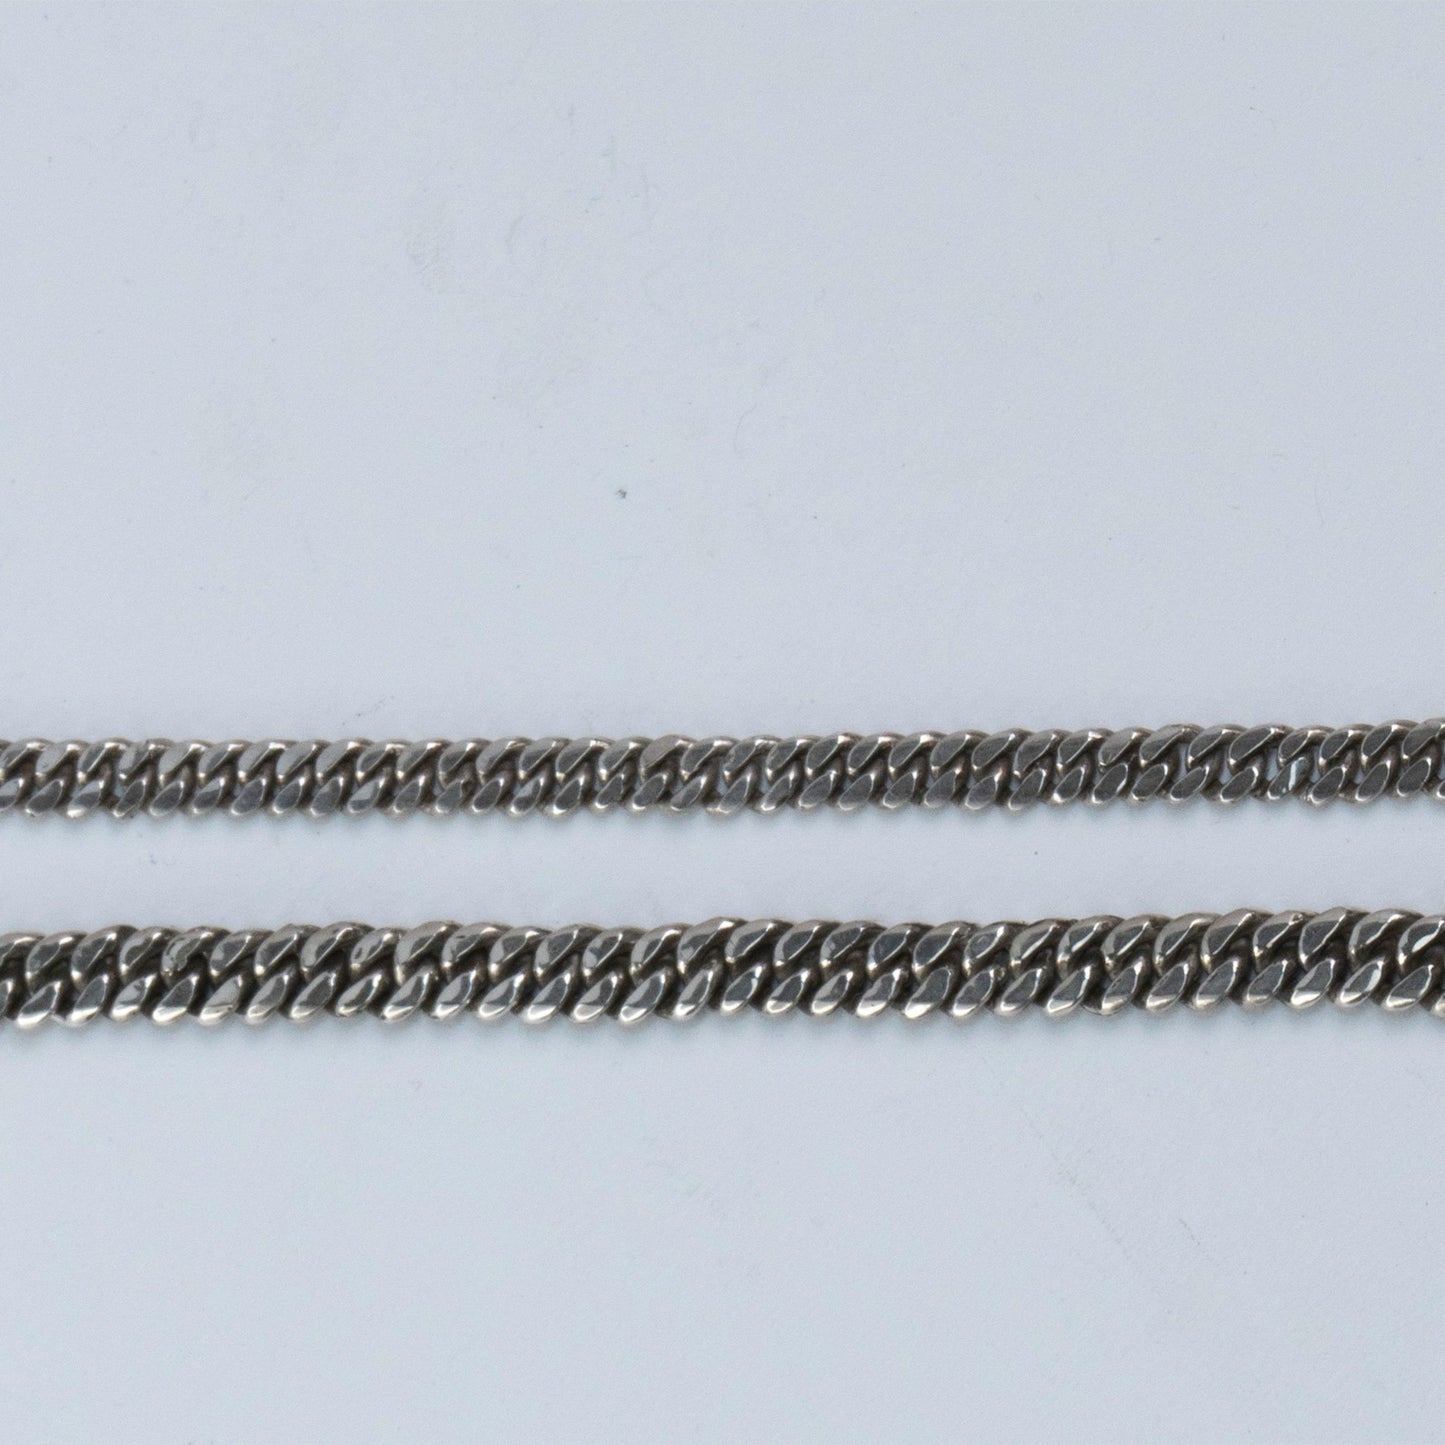 Handmade 6mm 16 inch Cuban Link Chain